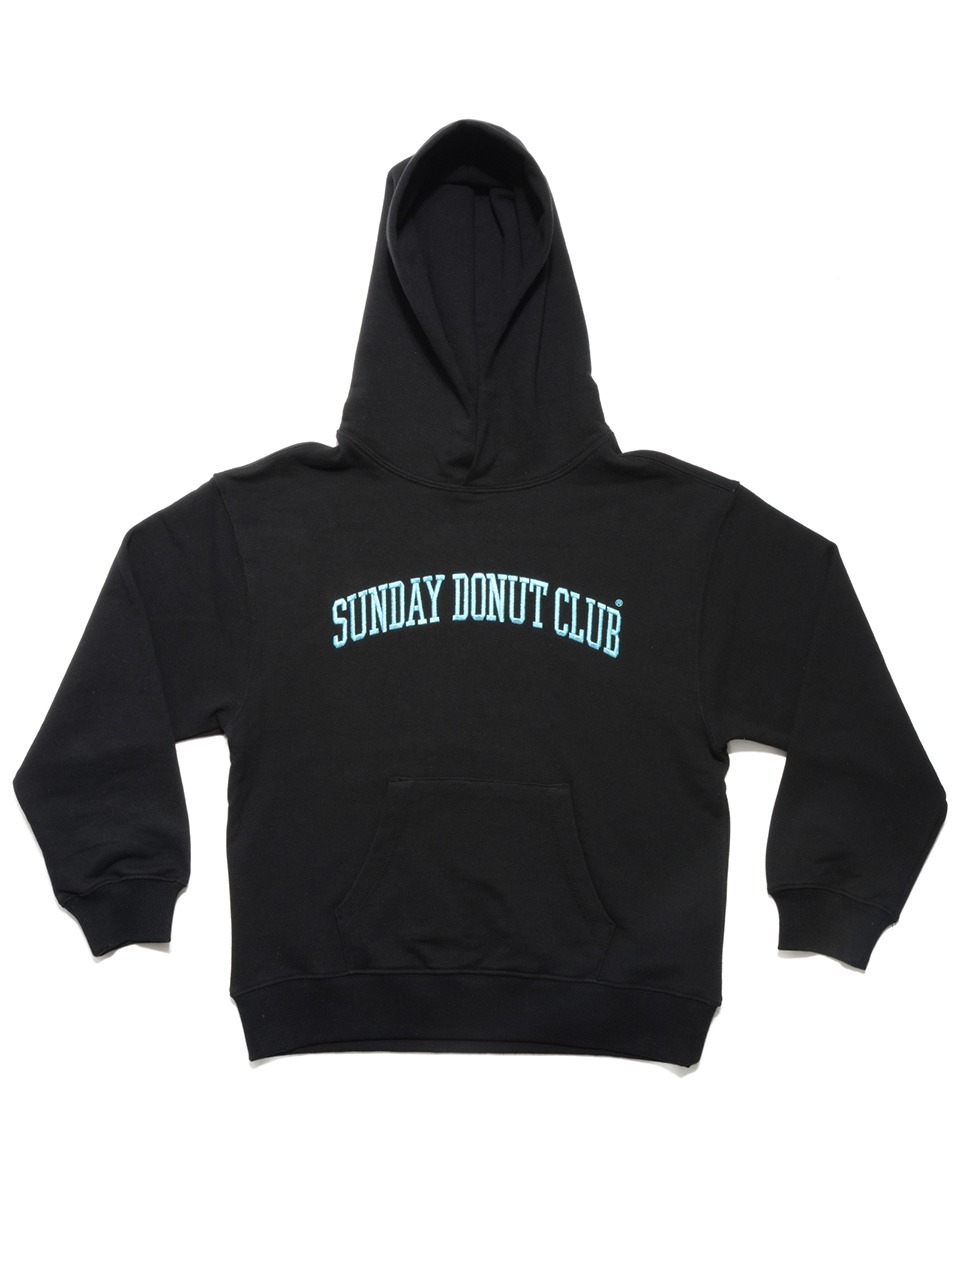 SUNDAY DONUT CLUB HOODIE [Black]